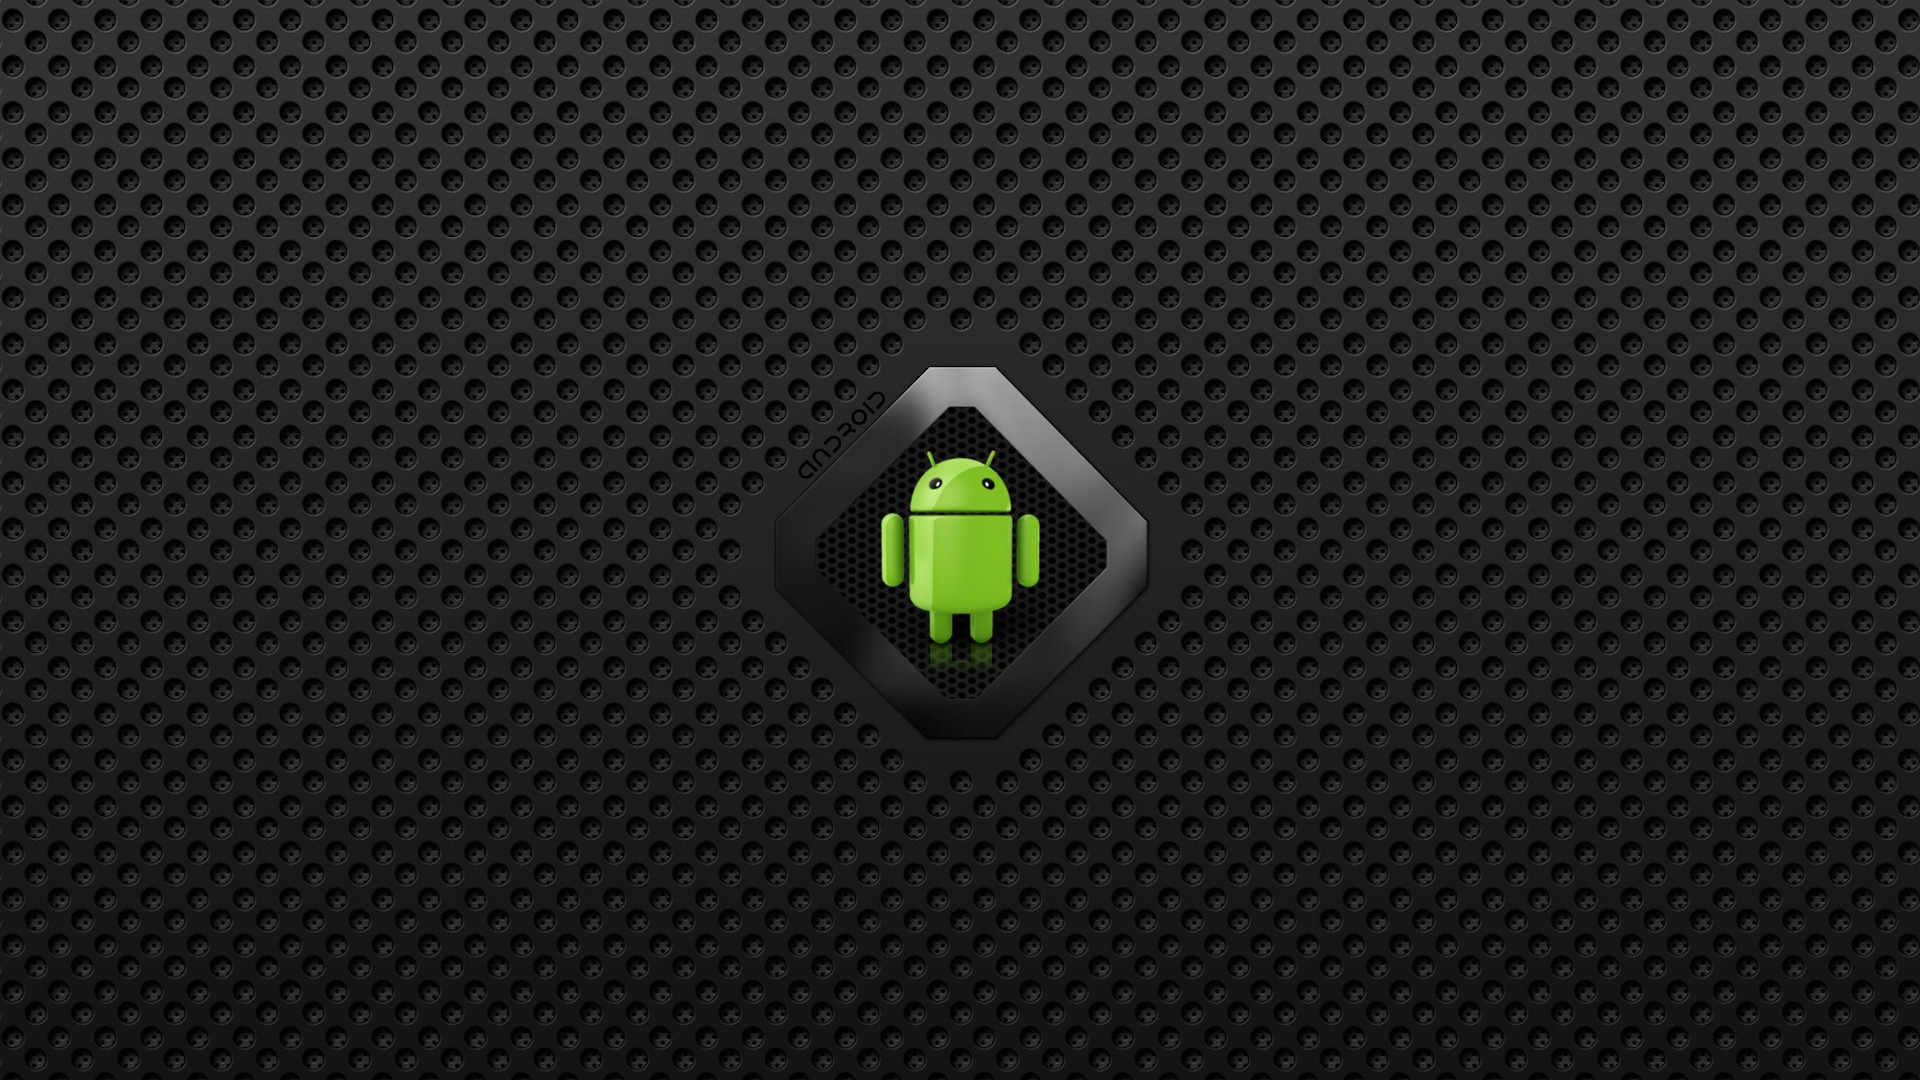 Full Android Desktop Wallpaper HD